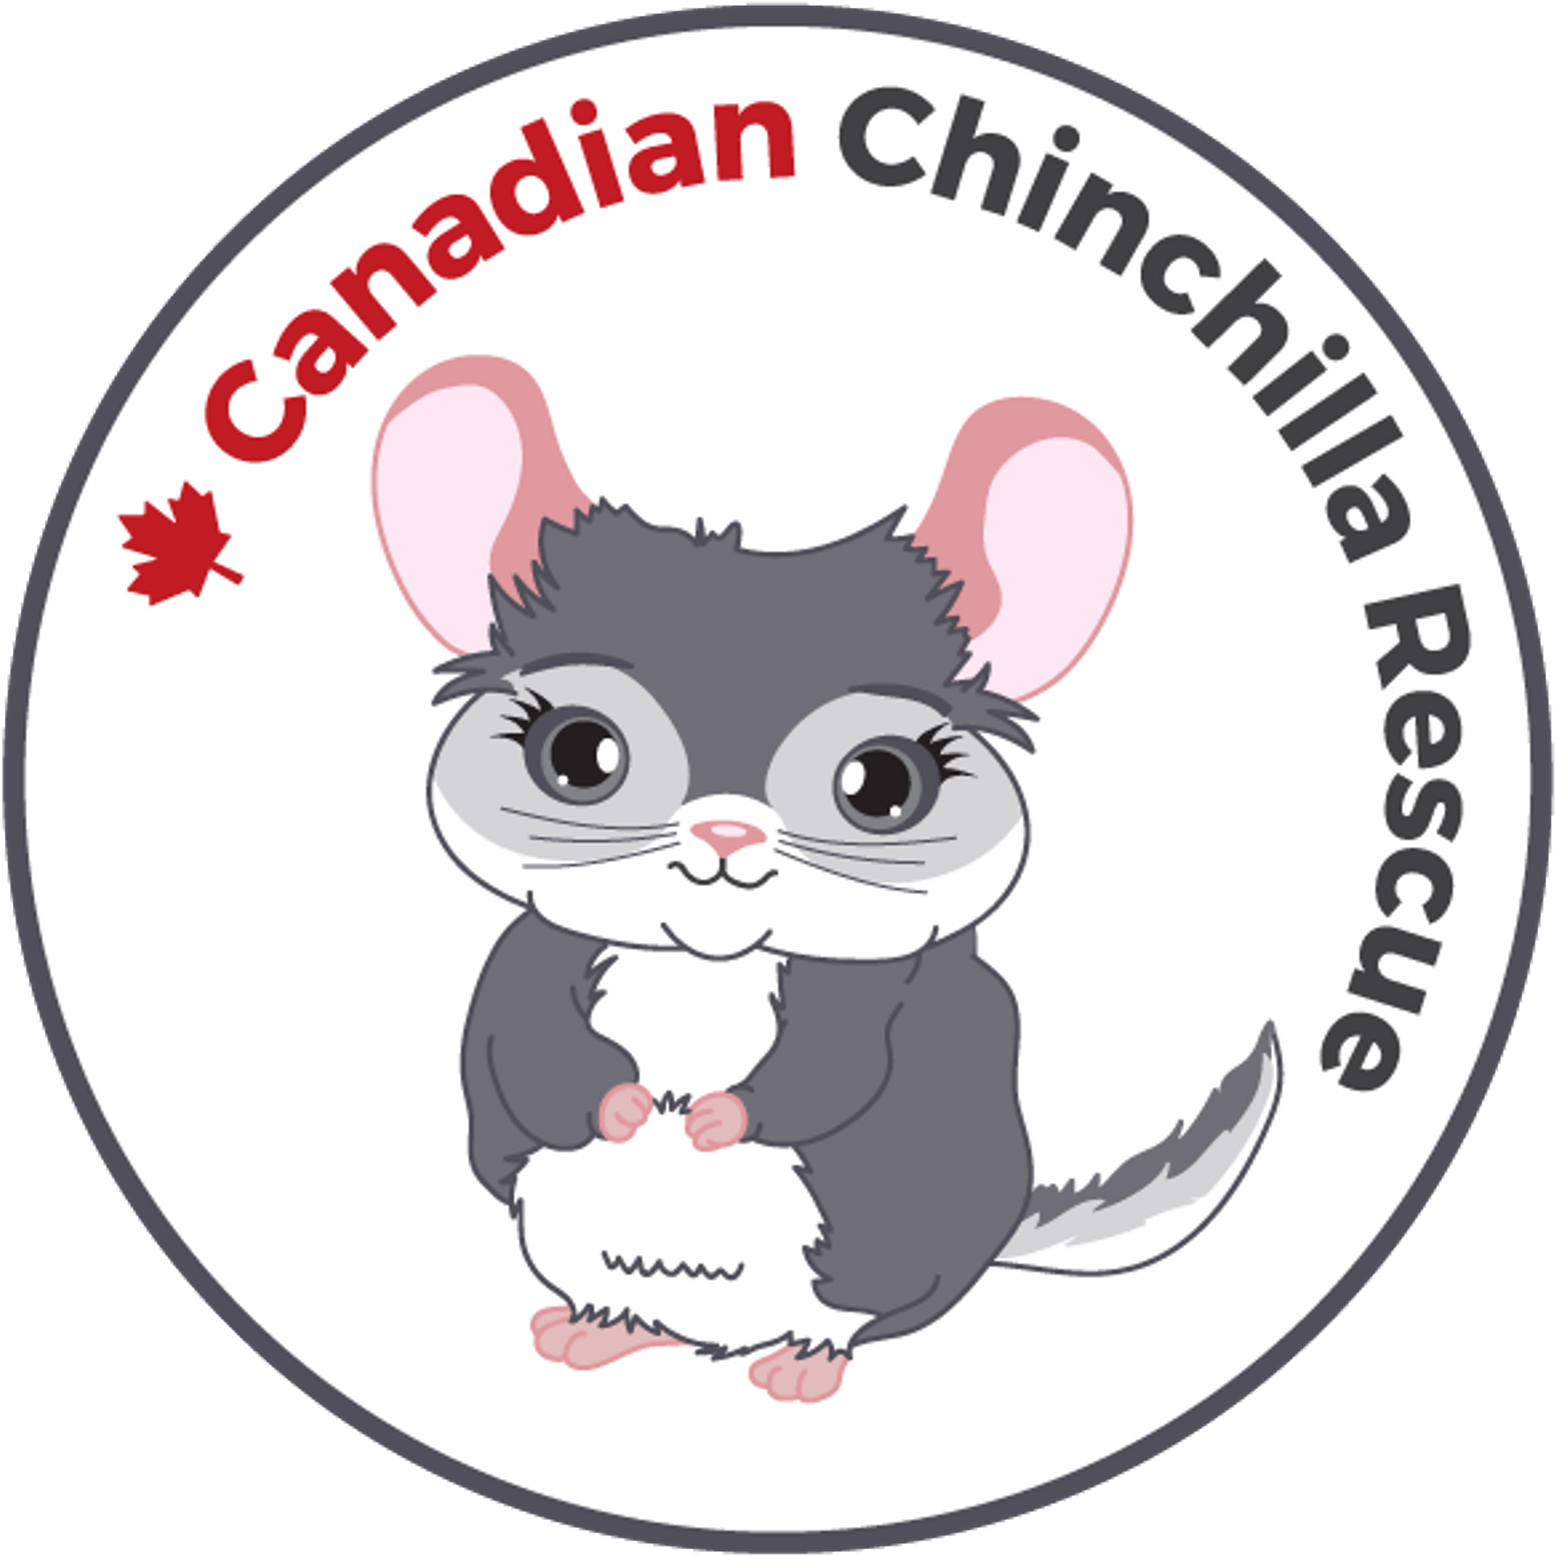 A Logo With A Cartoon Mouse